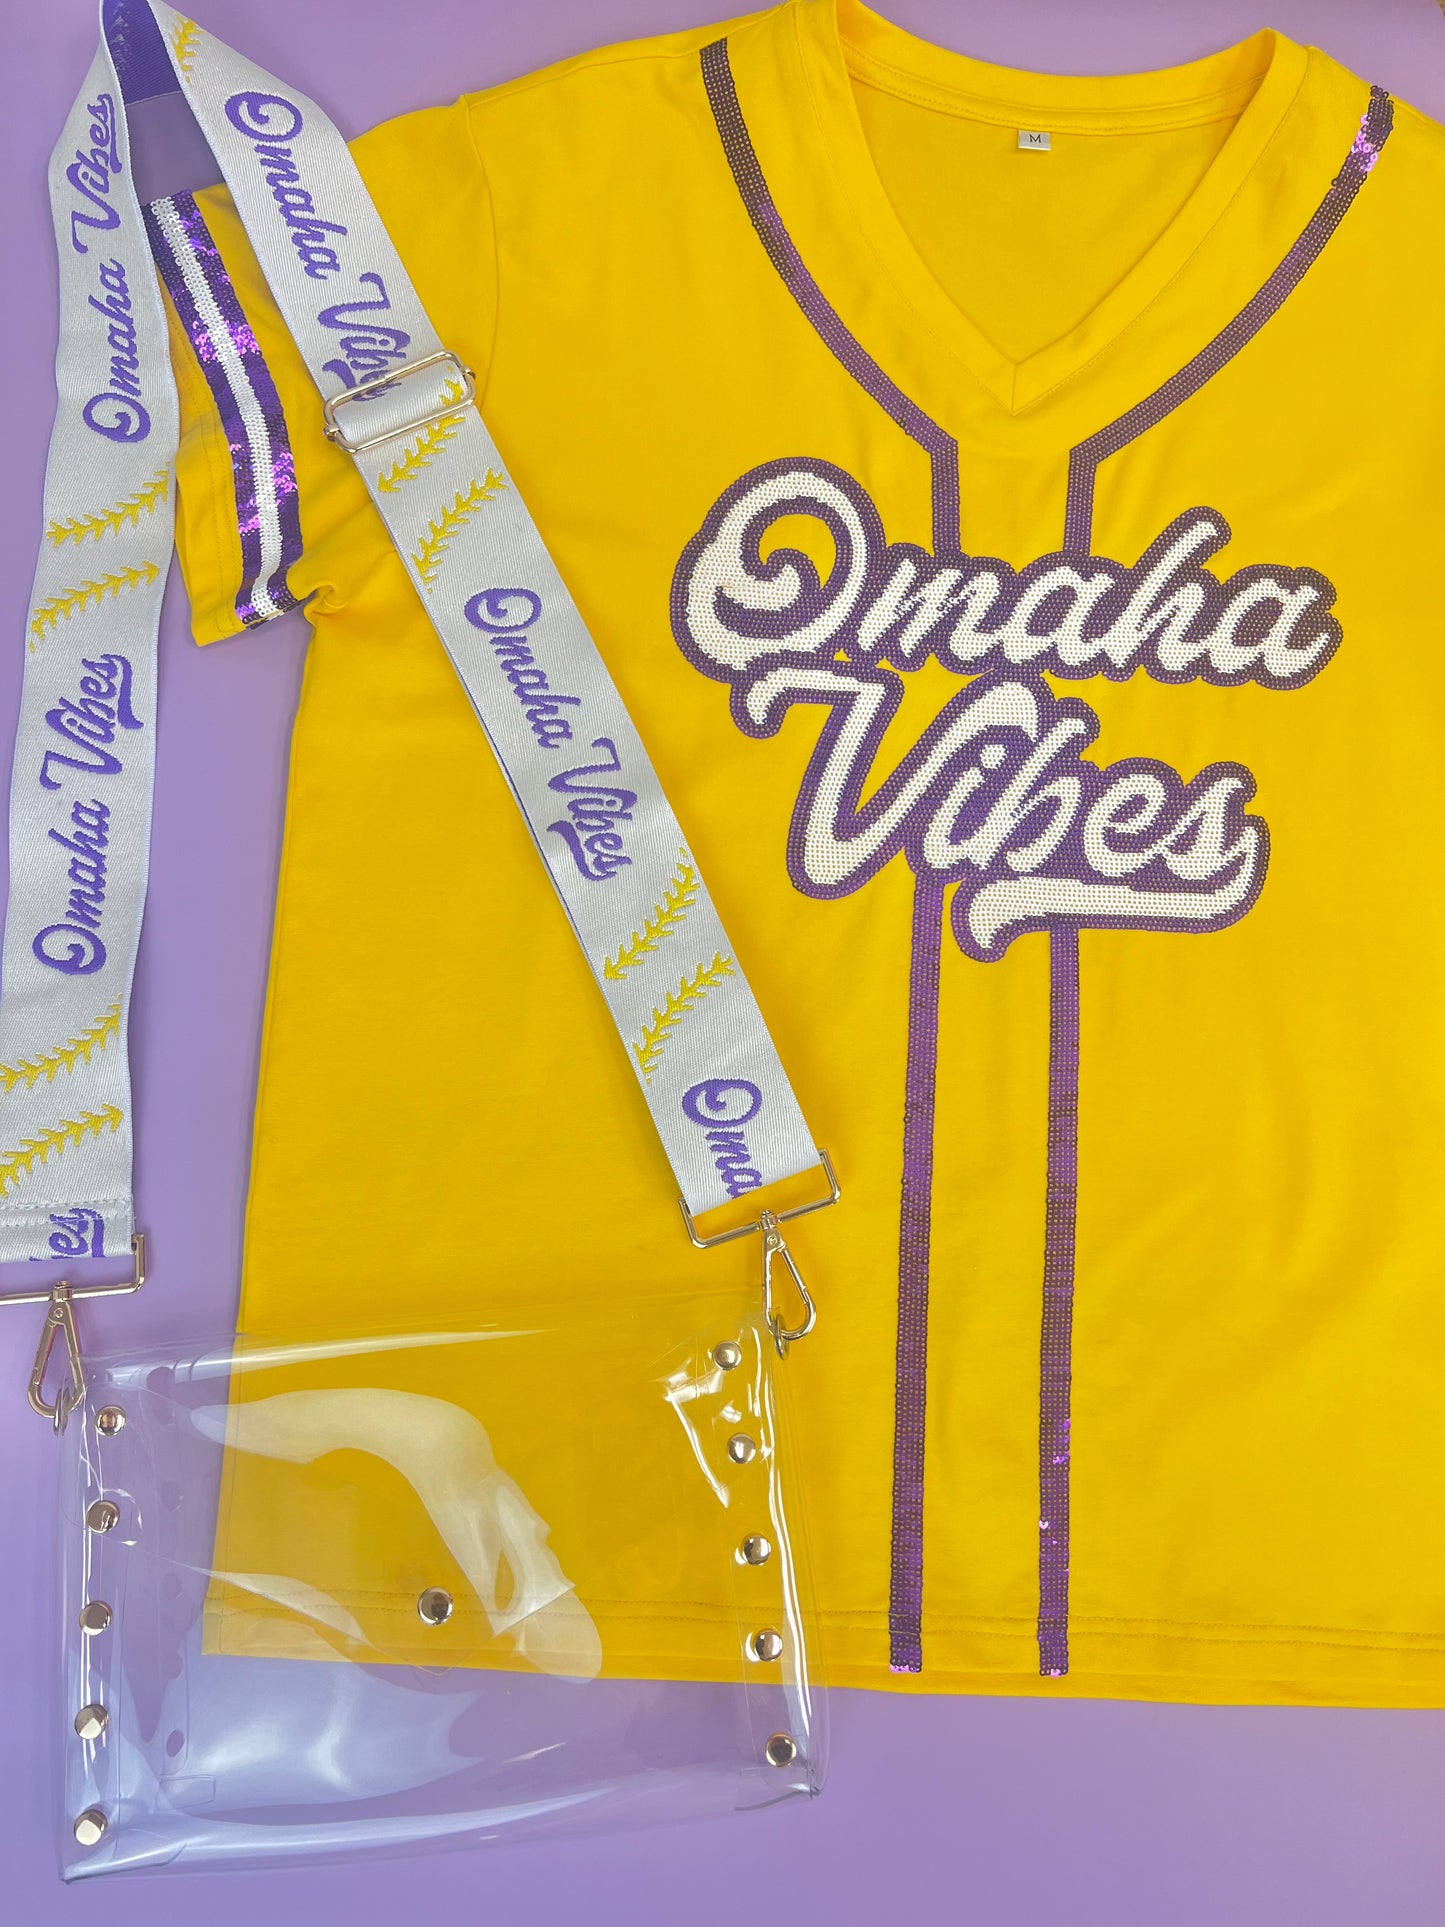 Omaha Vibes | Women's Baseball Jersey V-Neck Tee (Yellow)